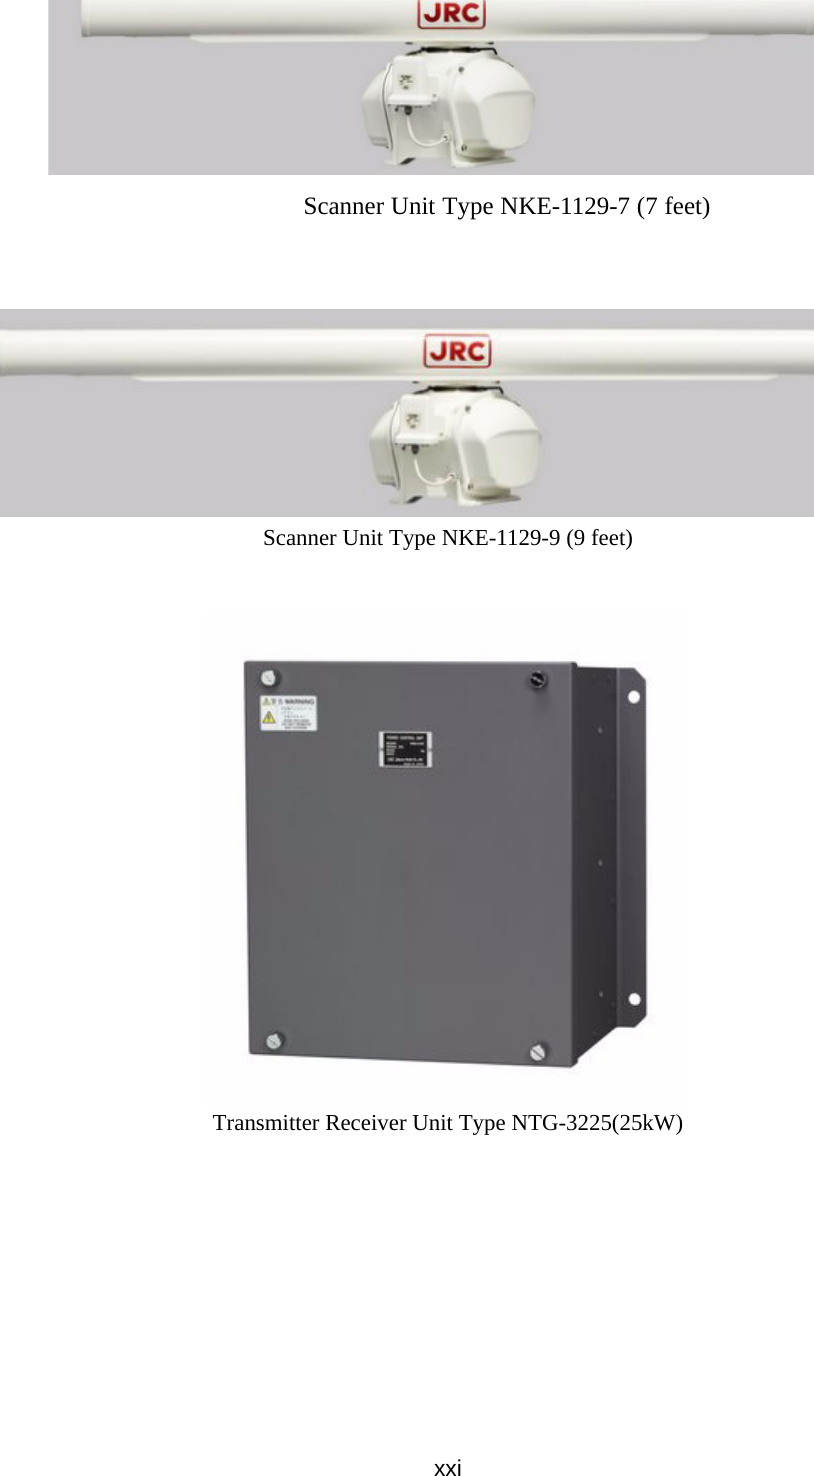 xxiScanner Unit Type NKE-1129-7 (7 feet)Scanner Unit Type NKE-1129-9 (9 feet)Transmitter Receiver Unit Type NTG-3225(25kW)